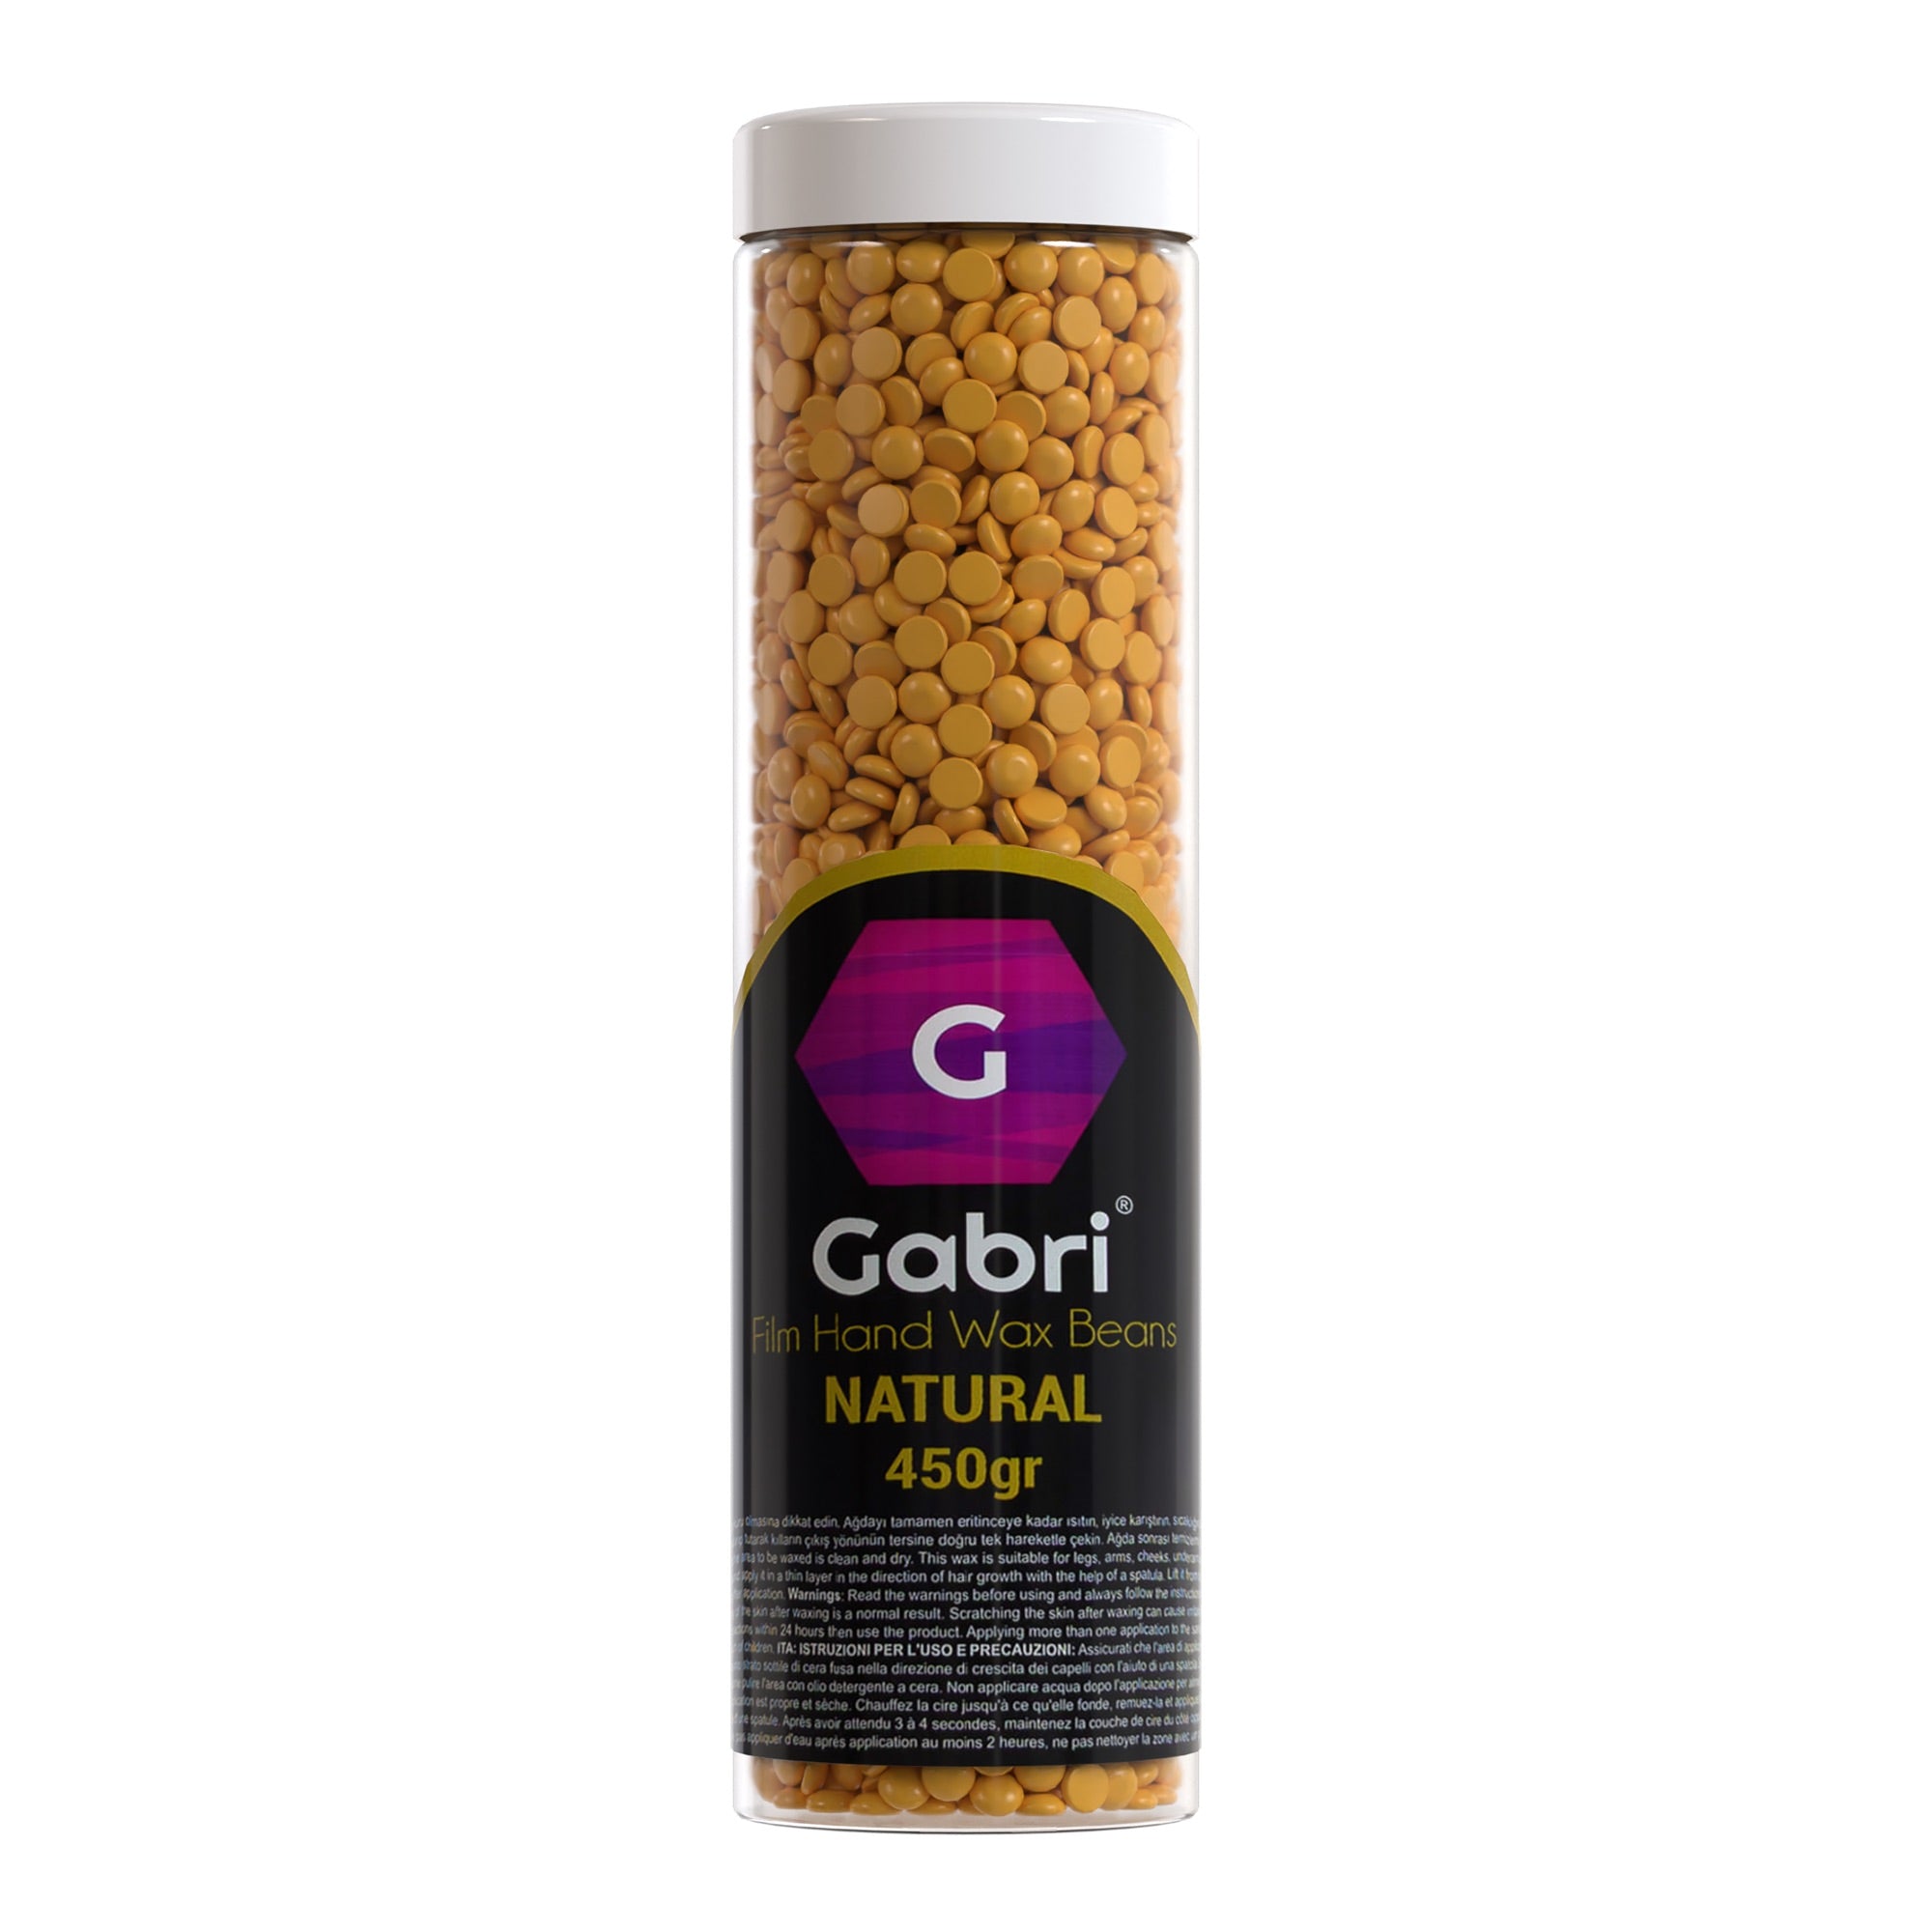 Gabri Professional - Hair Removal Hot Wax Film Hand Mask Beans Natural 450g